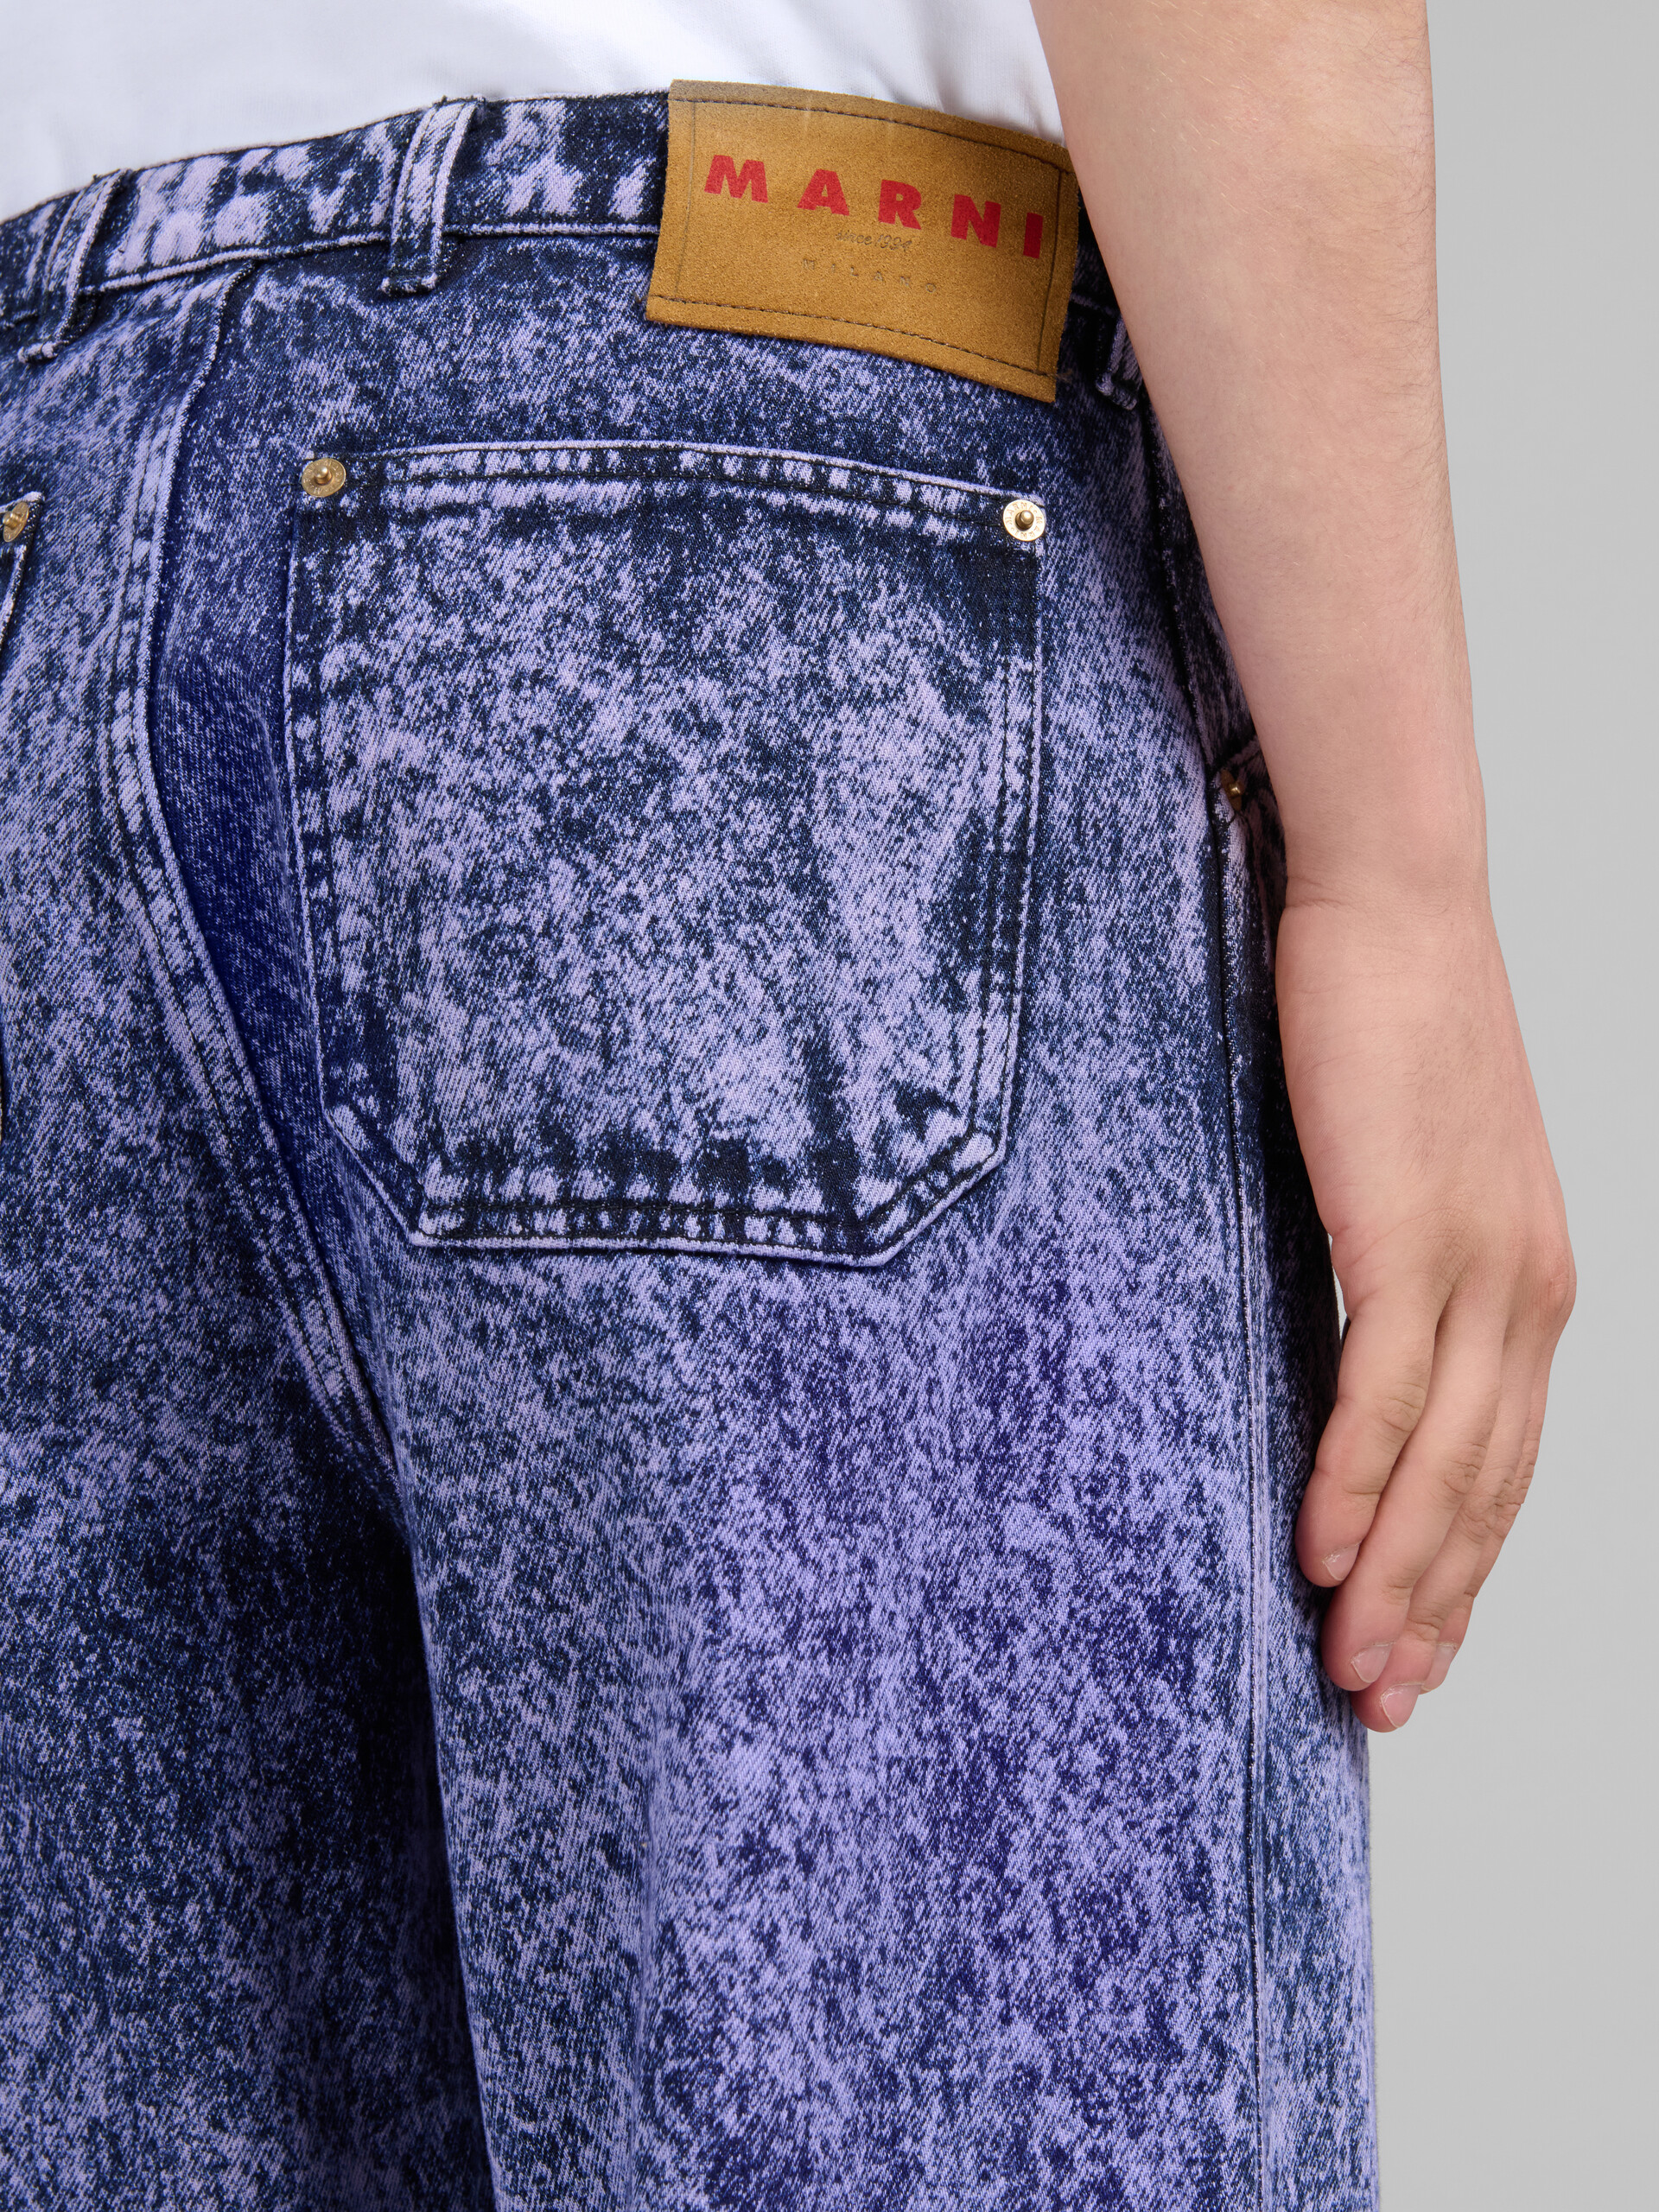 Blue marble-dyed denim jeans - Pants - Image 4